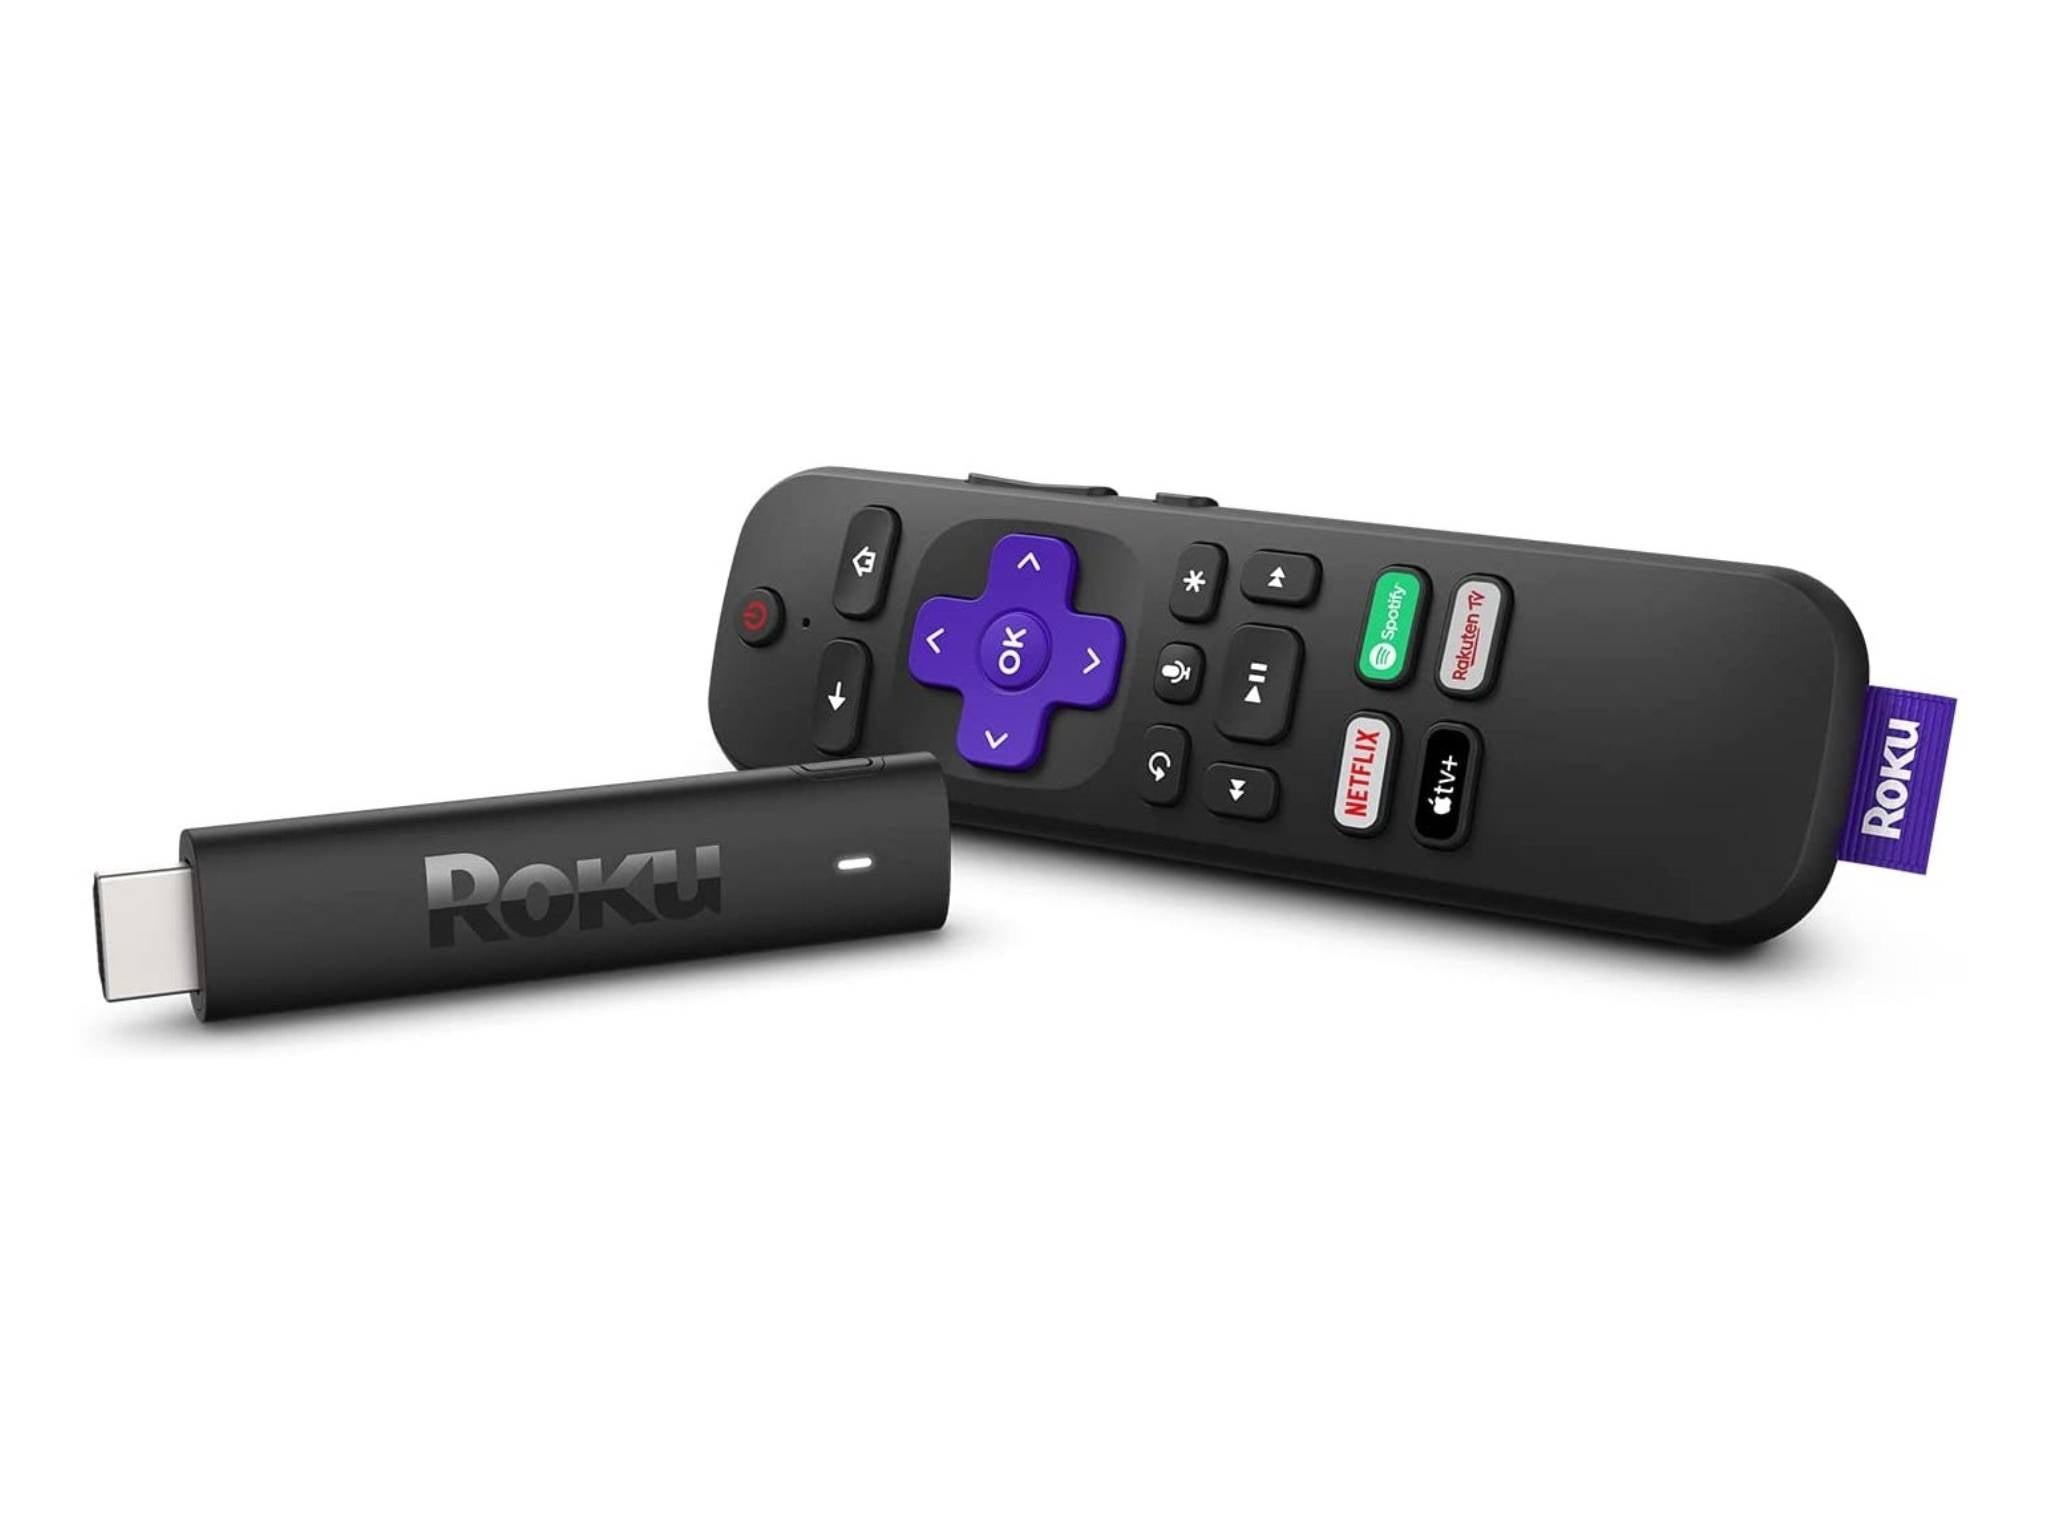 Roku Streaming Stick 4K and remote